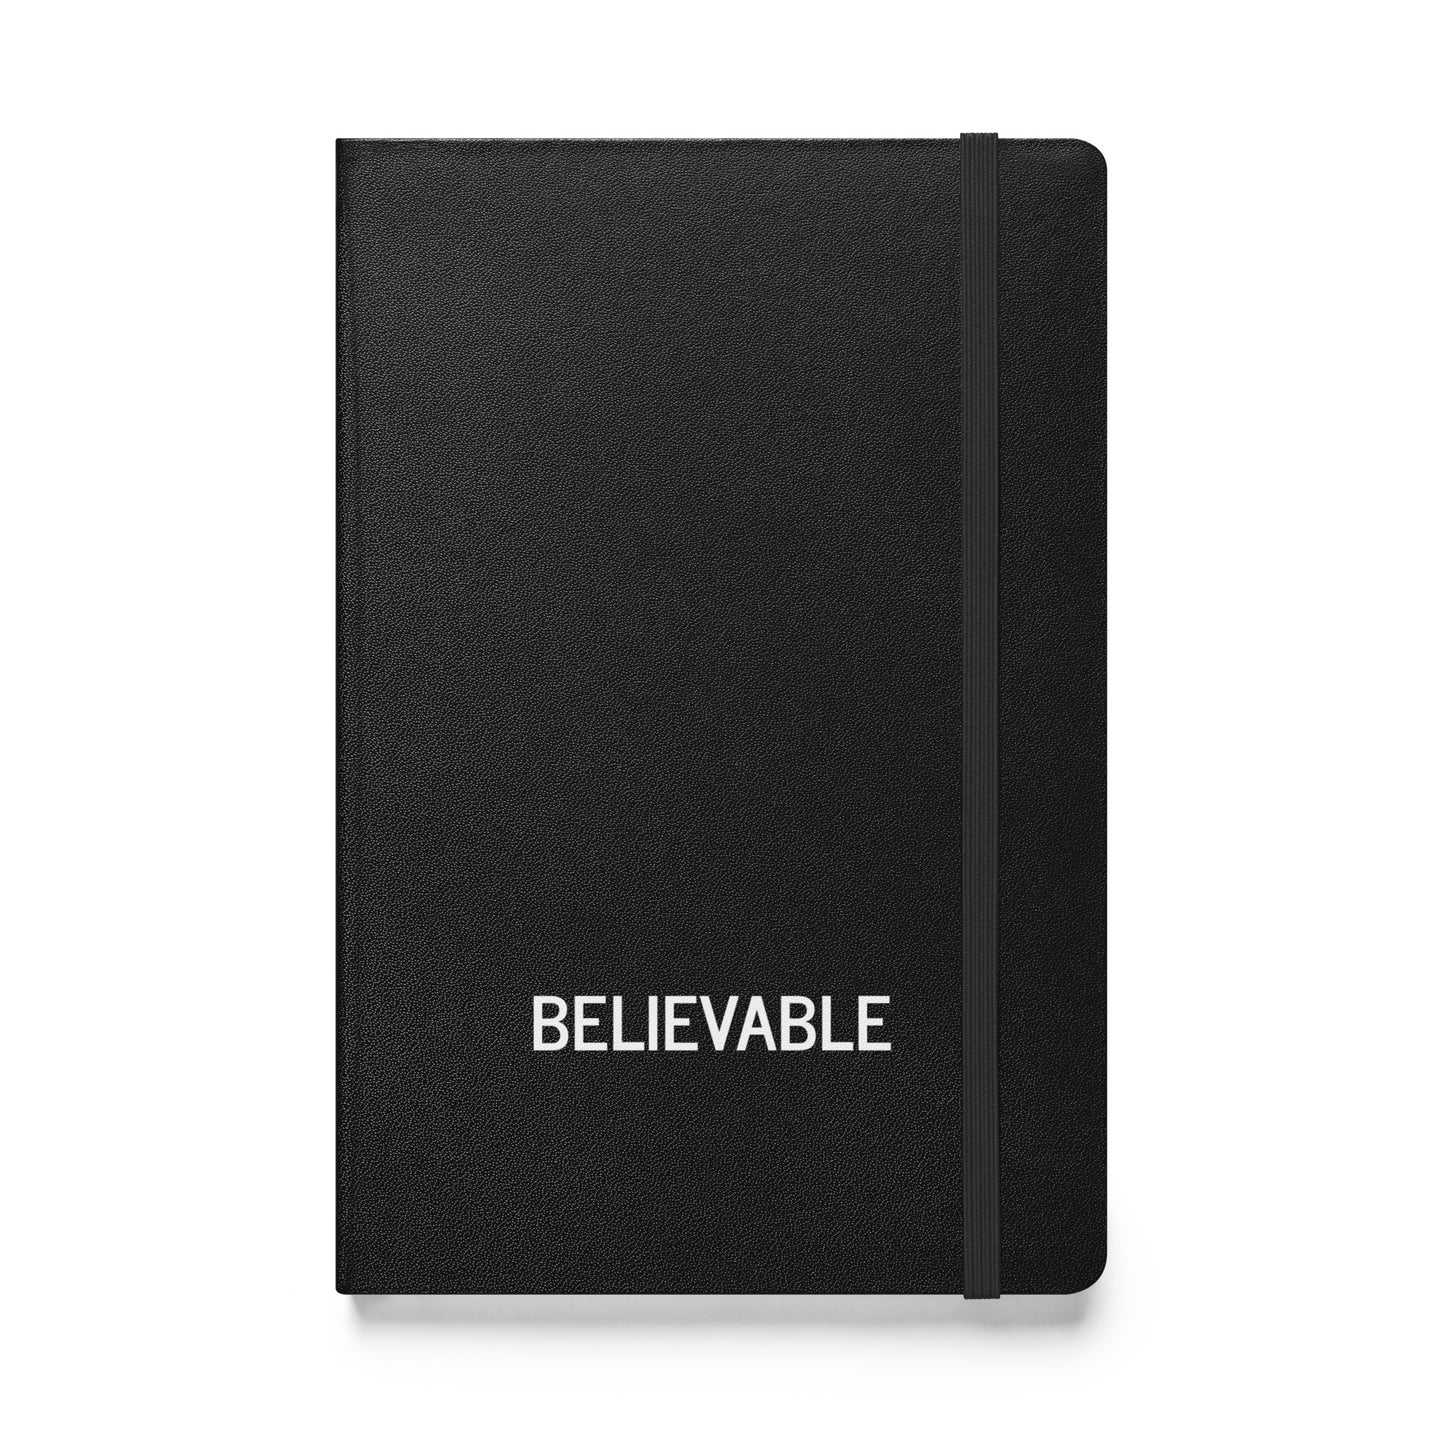 Believable Bound notebook